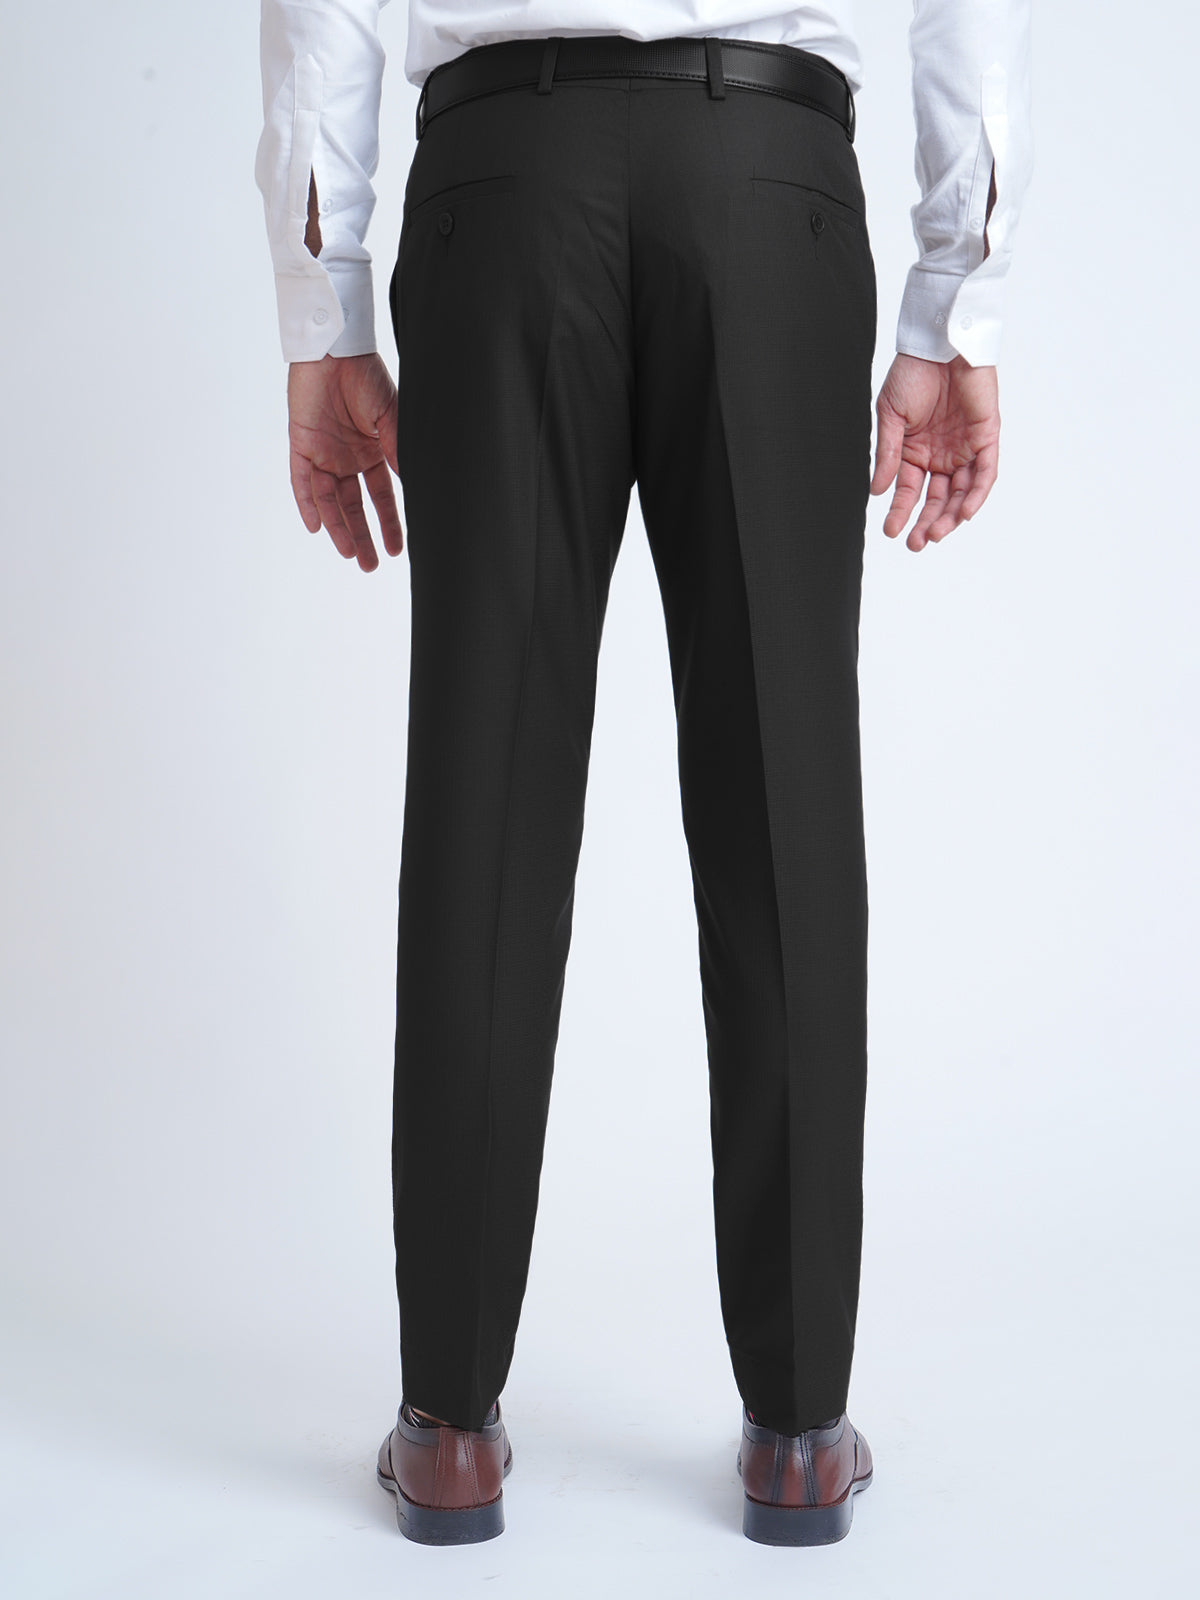 Black Plain Executive Formal Dress Trouser (FDT-125)